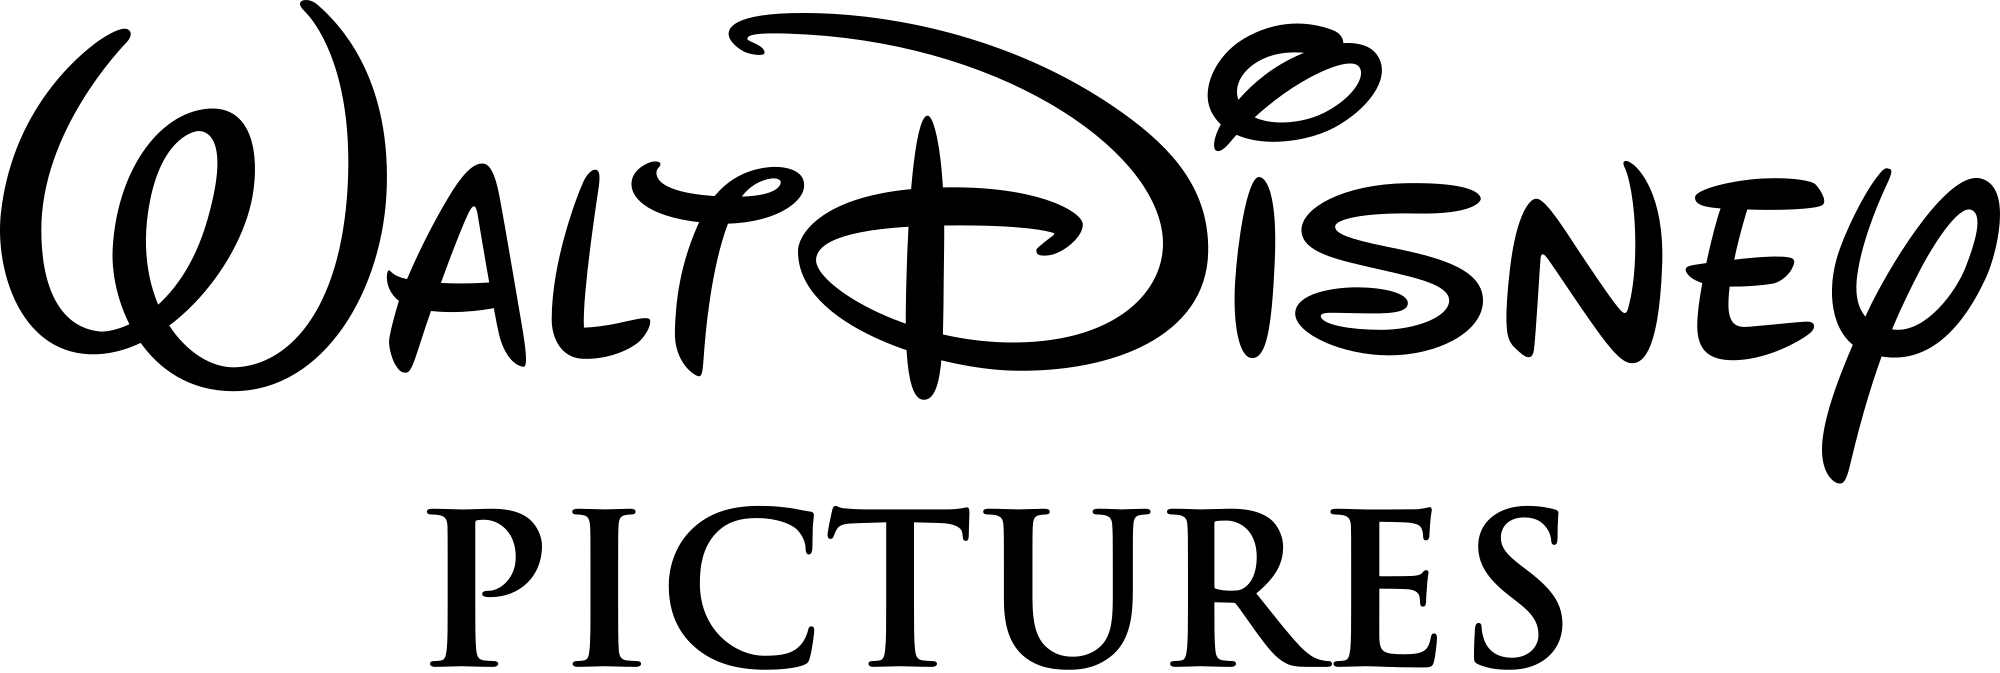 Logo Disney PNG Pic